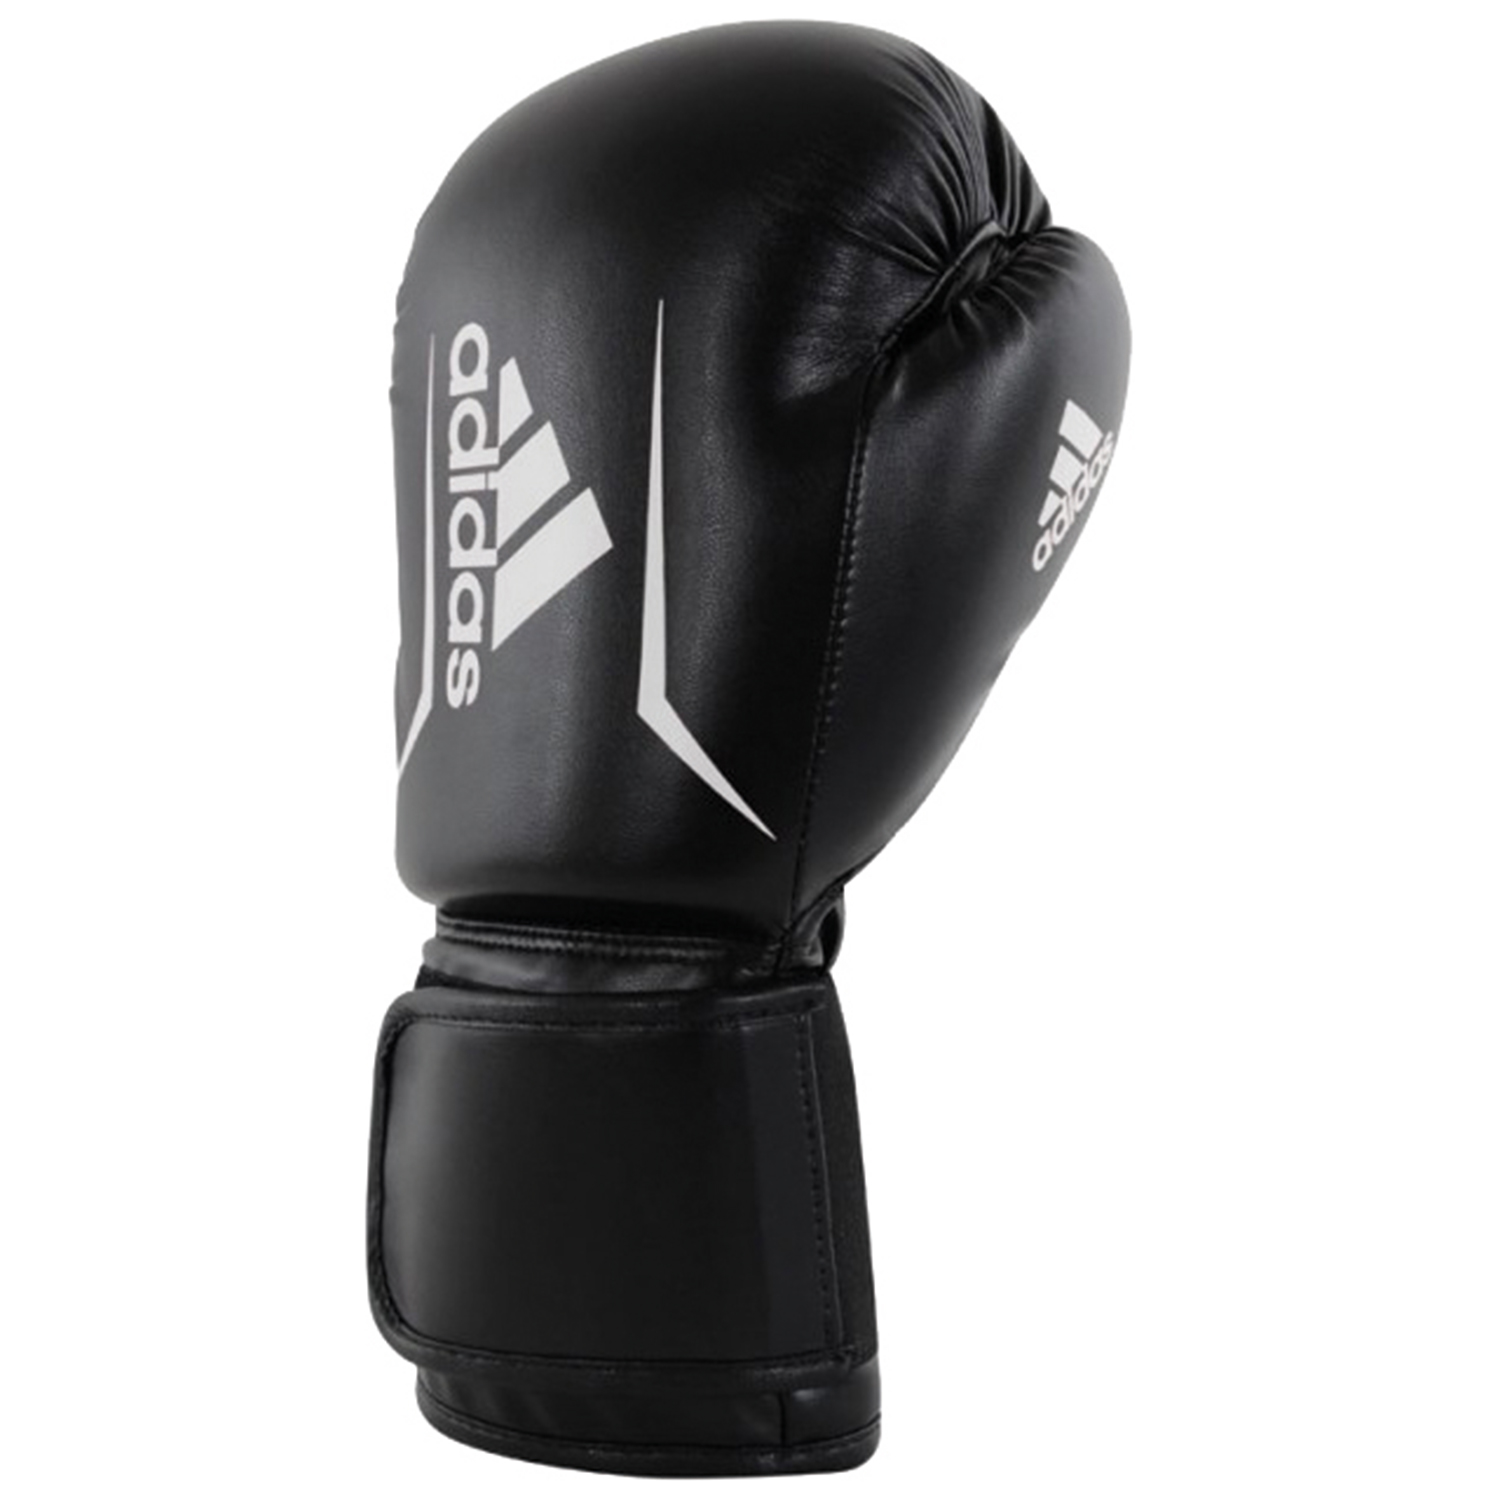 Adidas Speed 50 boxing gloves black/white 14 oz